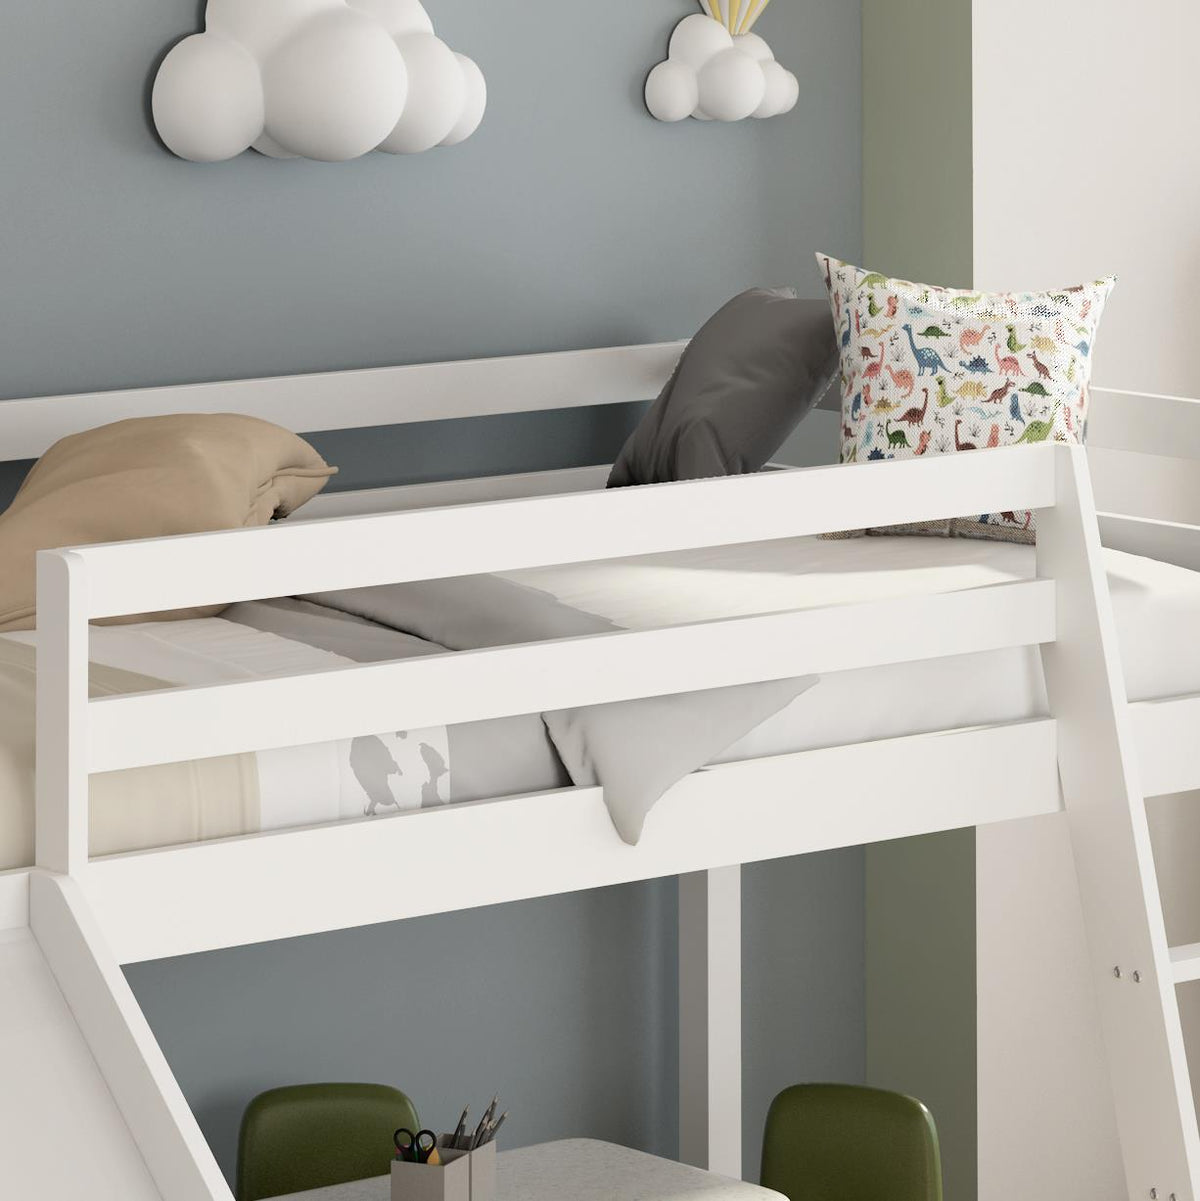 Mid sleeper with slide Bed kids white 3ft single wooden childrens bedroom furniture